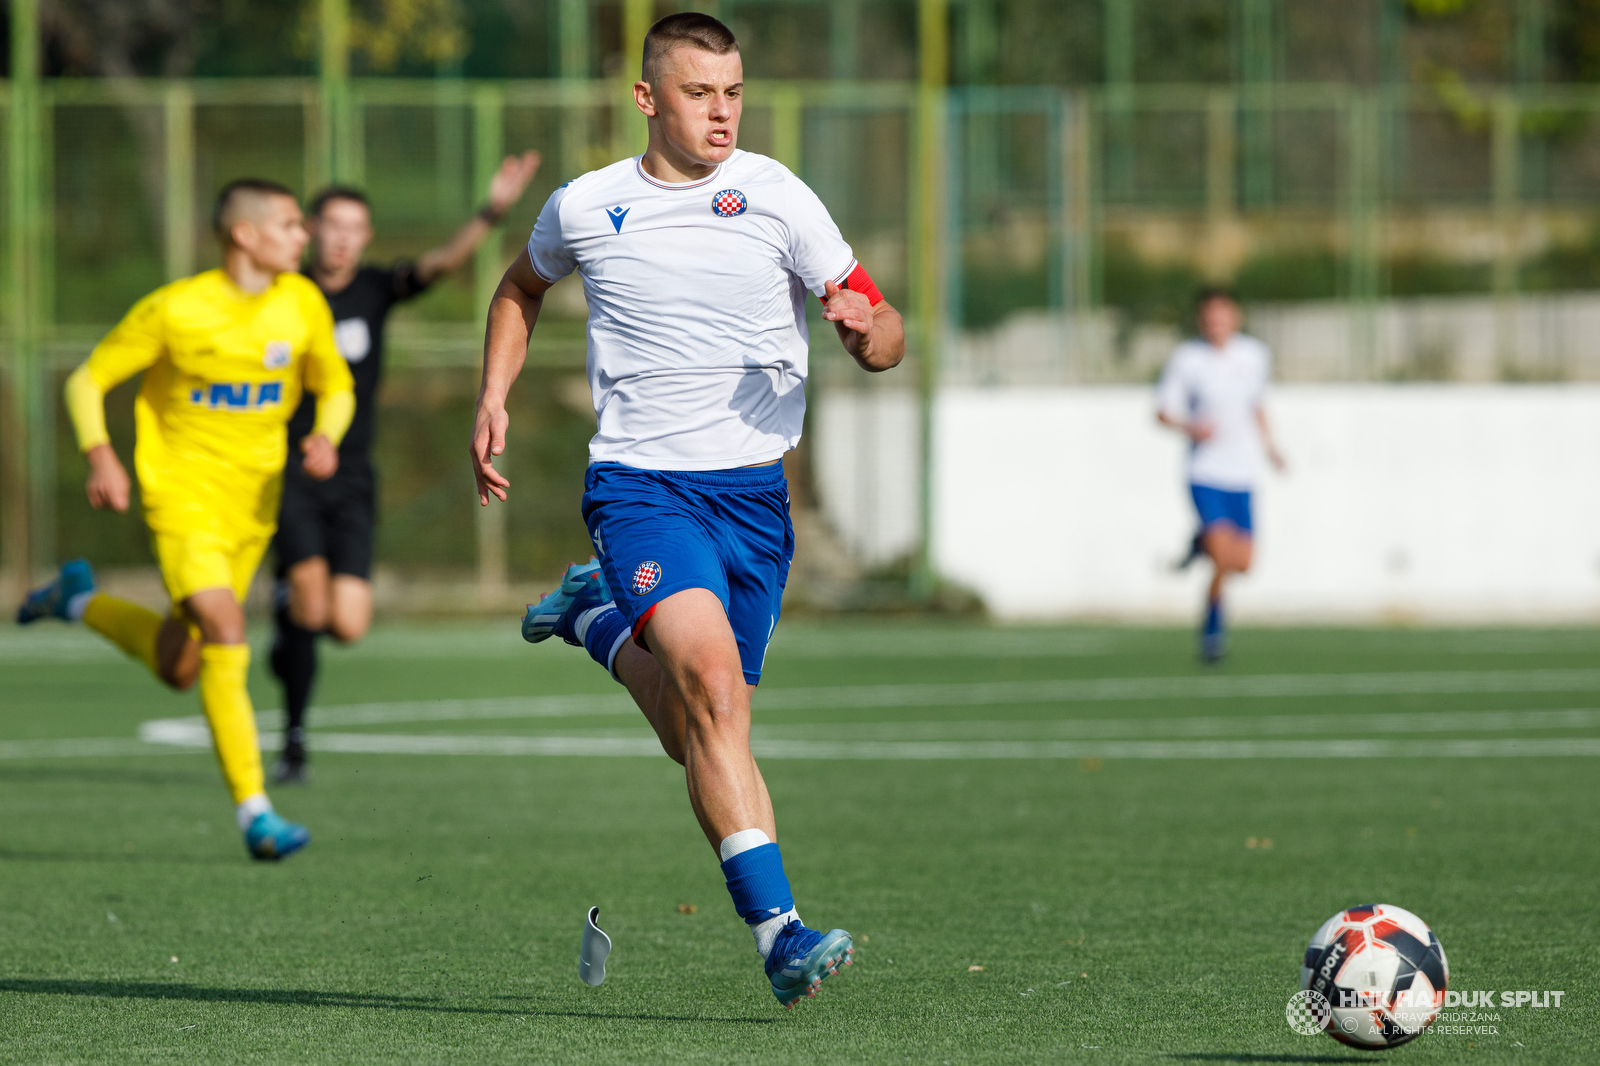 Kup pioniri i kadeti: Hajduk - Solin